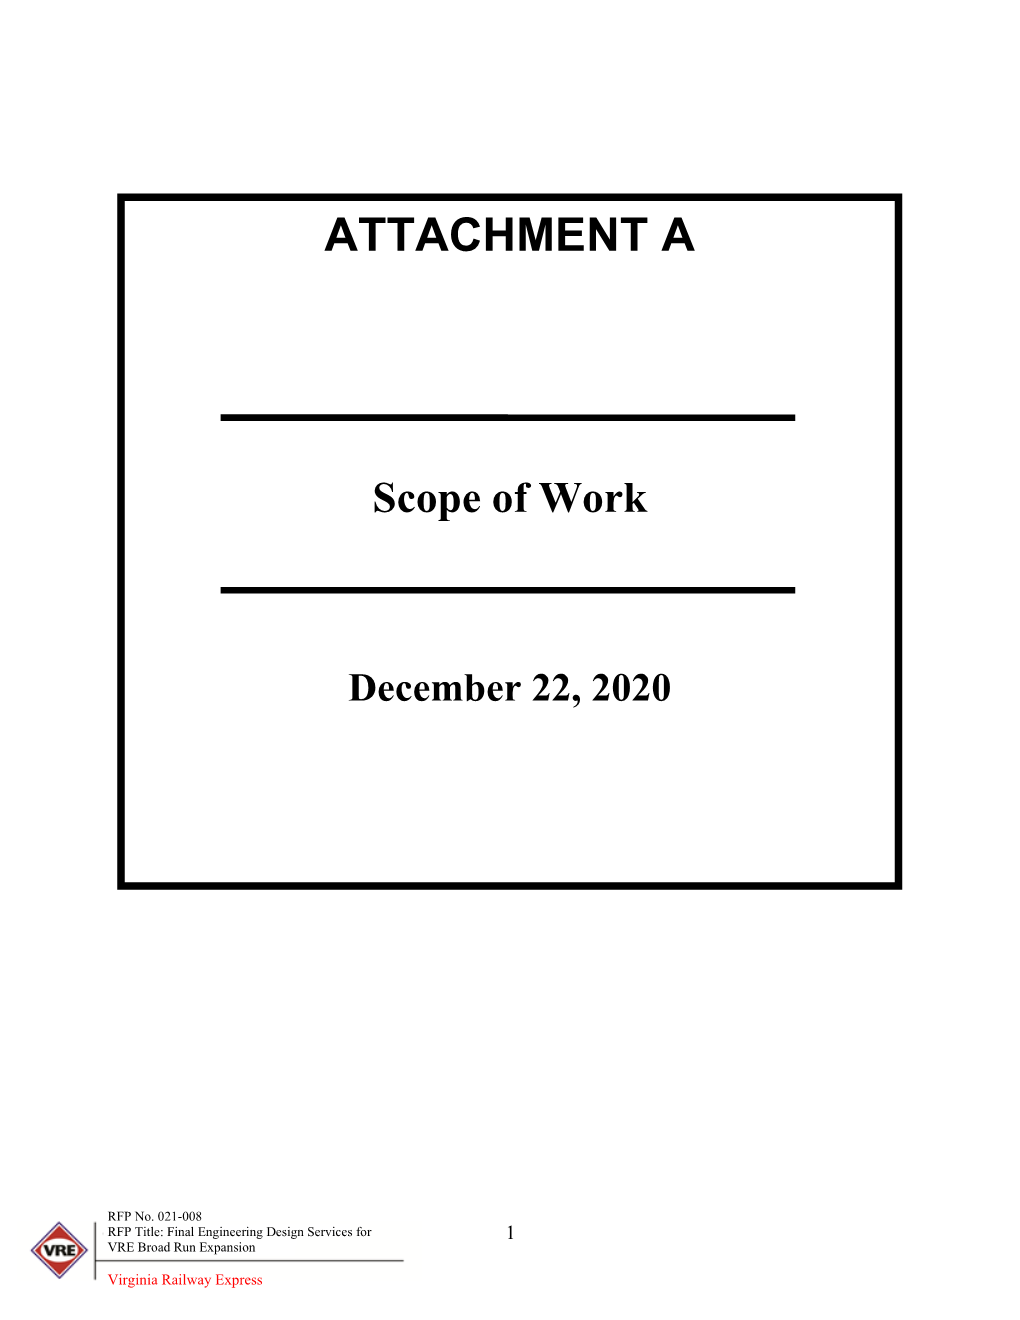 Attachment A- Scope of Work